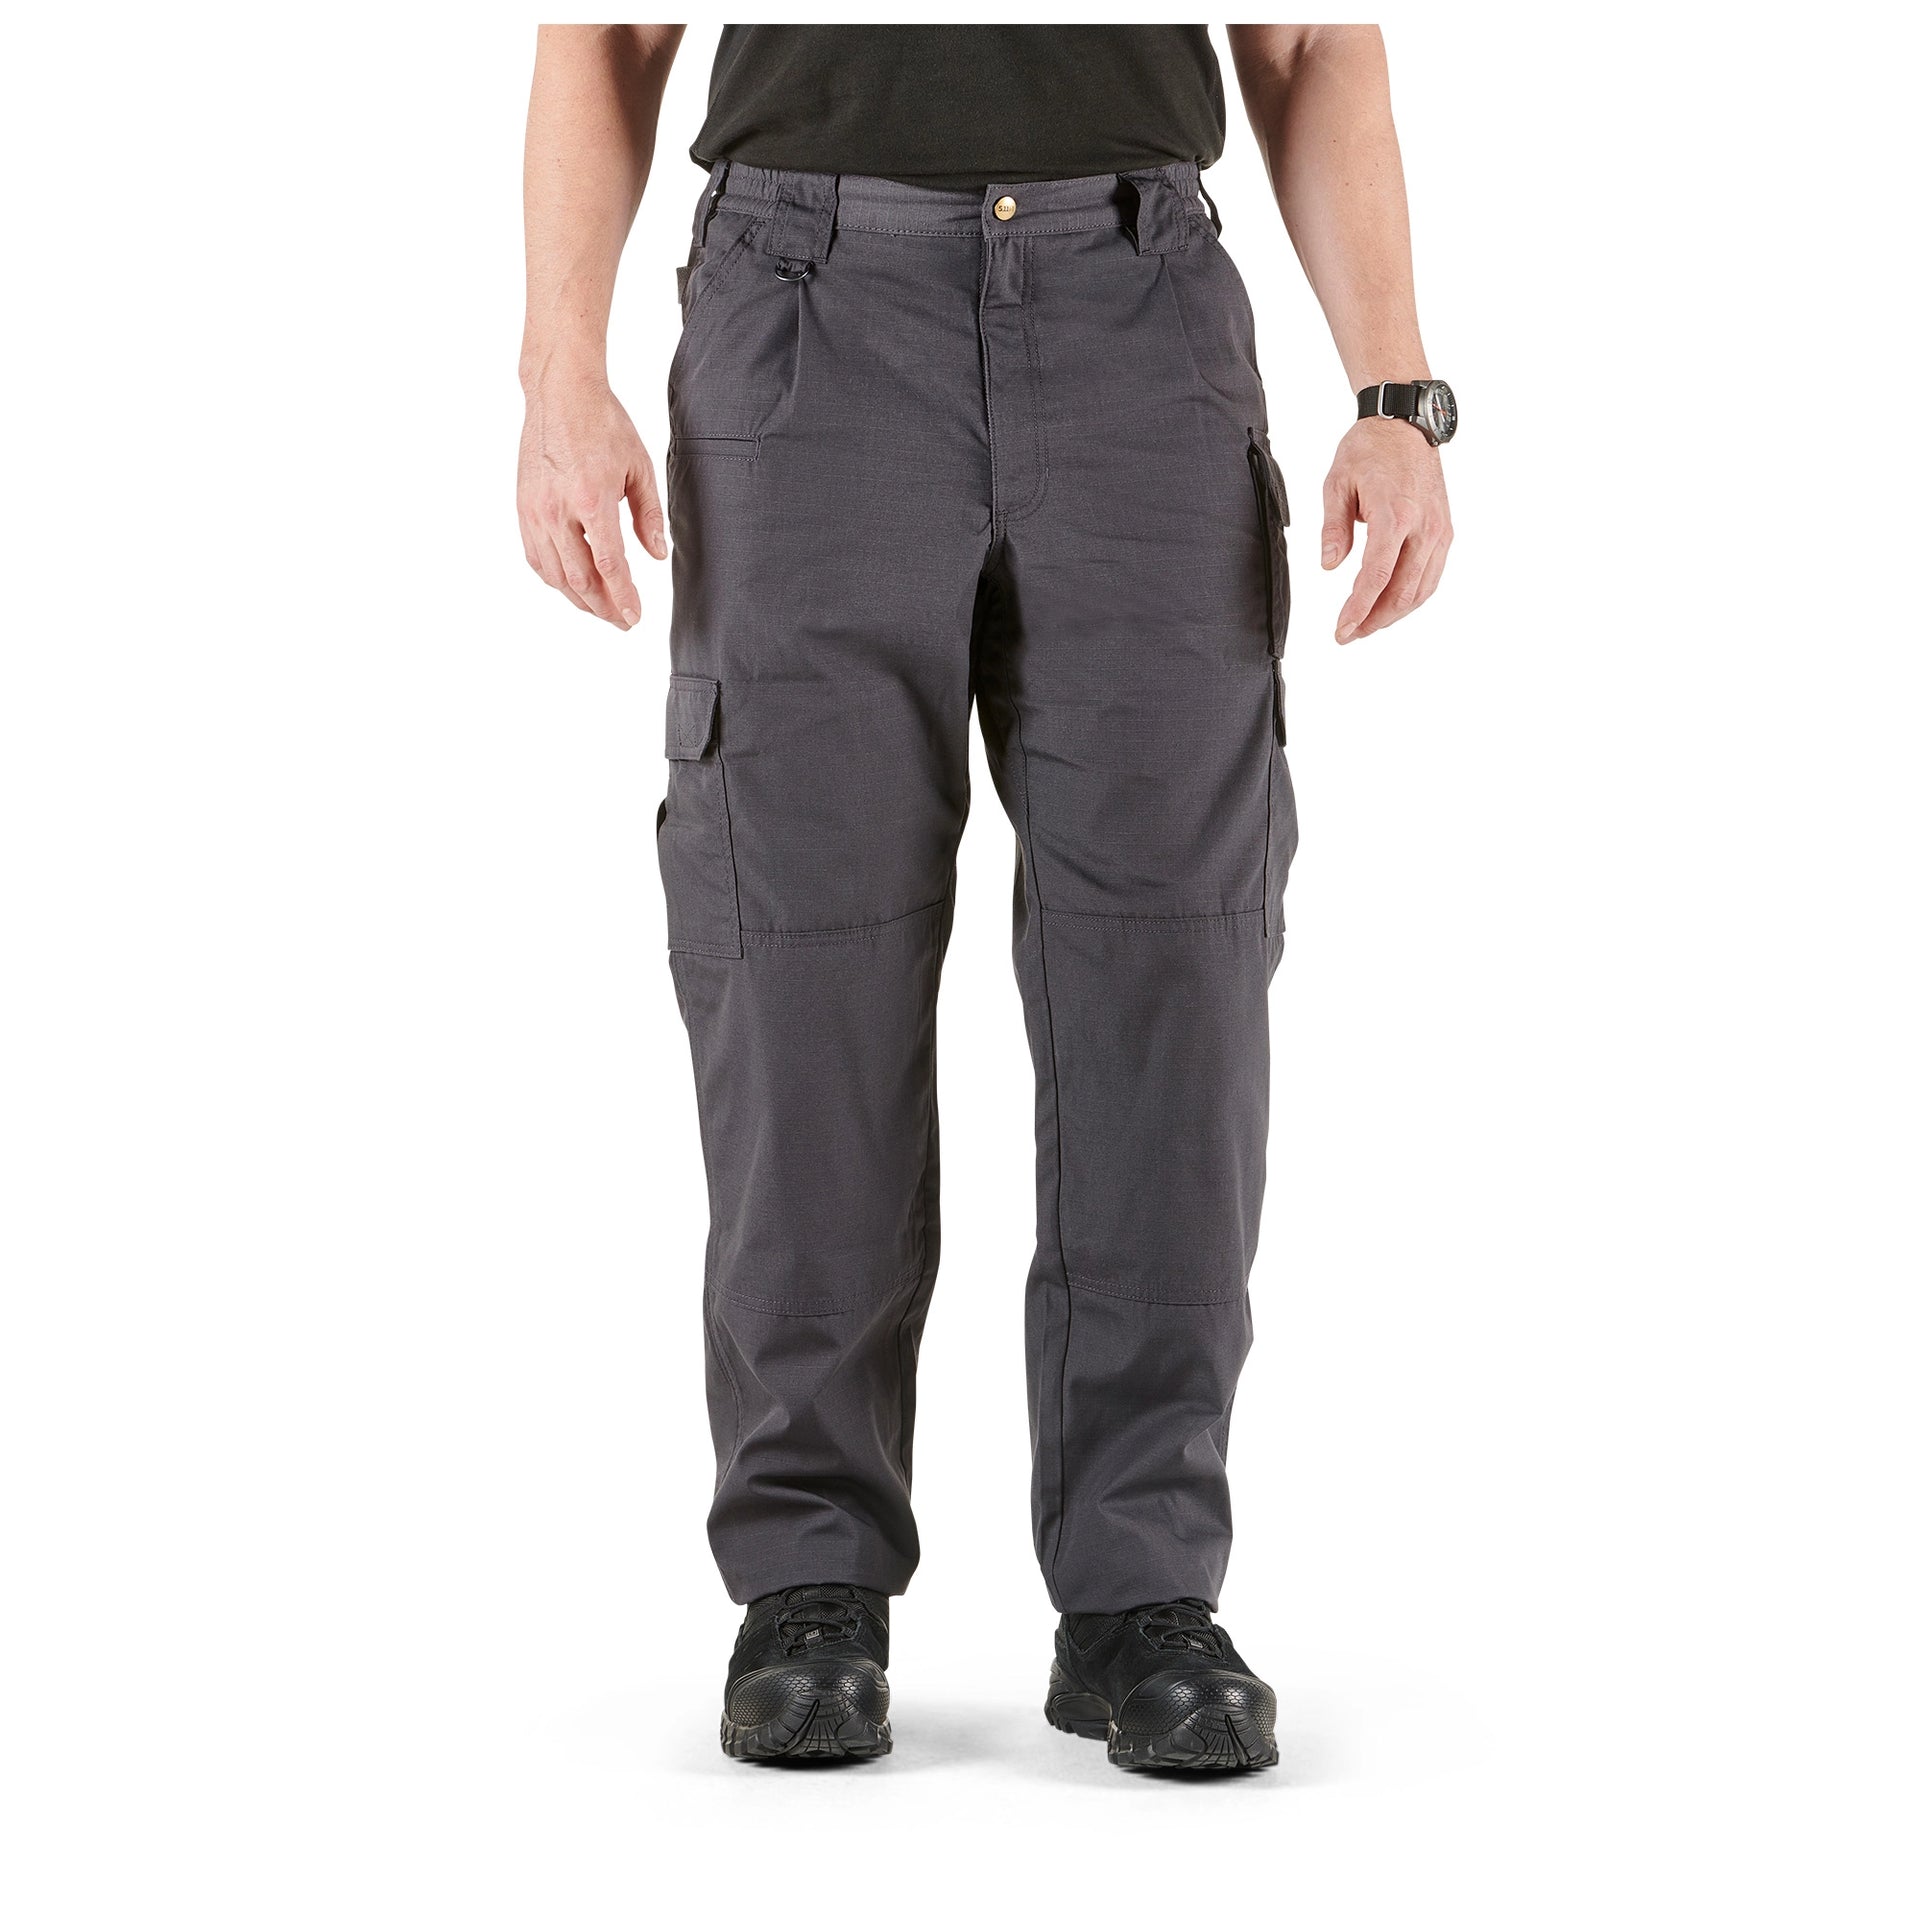 Ripstop Pant - Charcoal, Men's Ripstop Pants